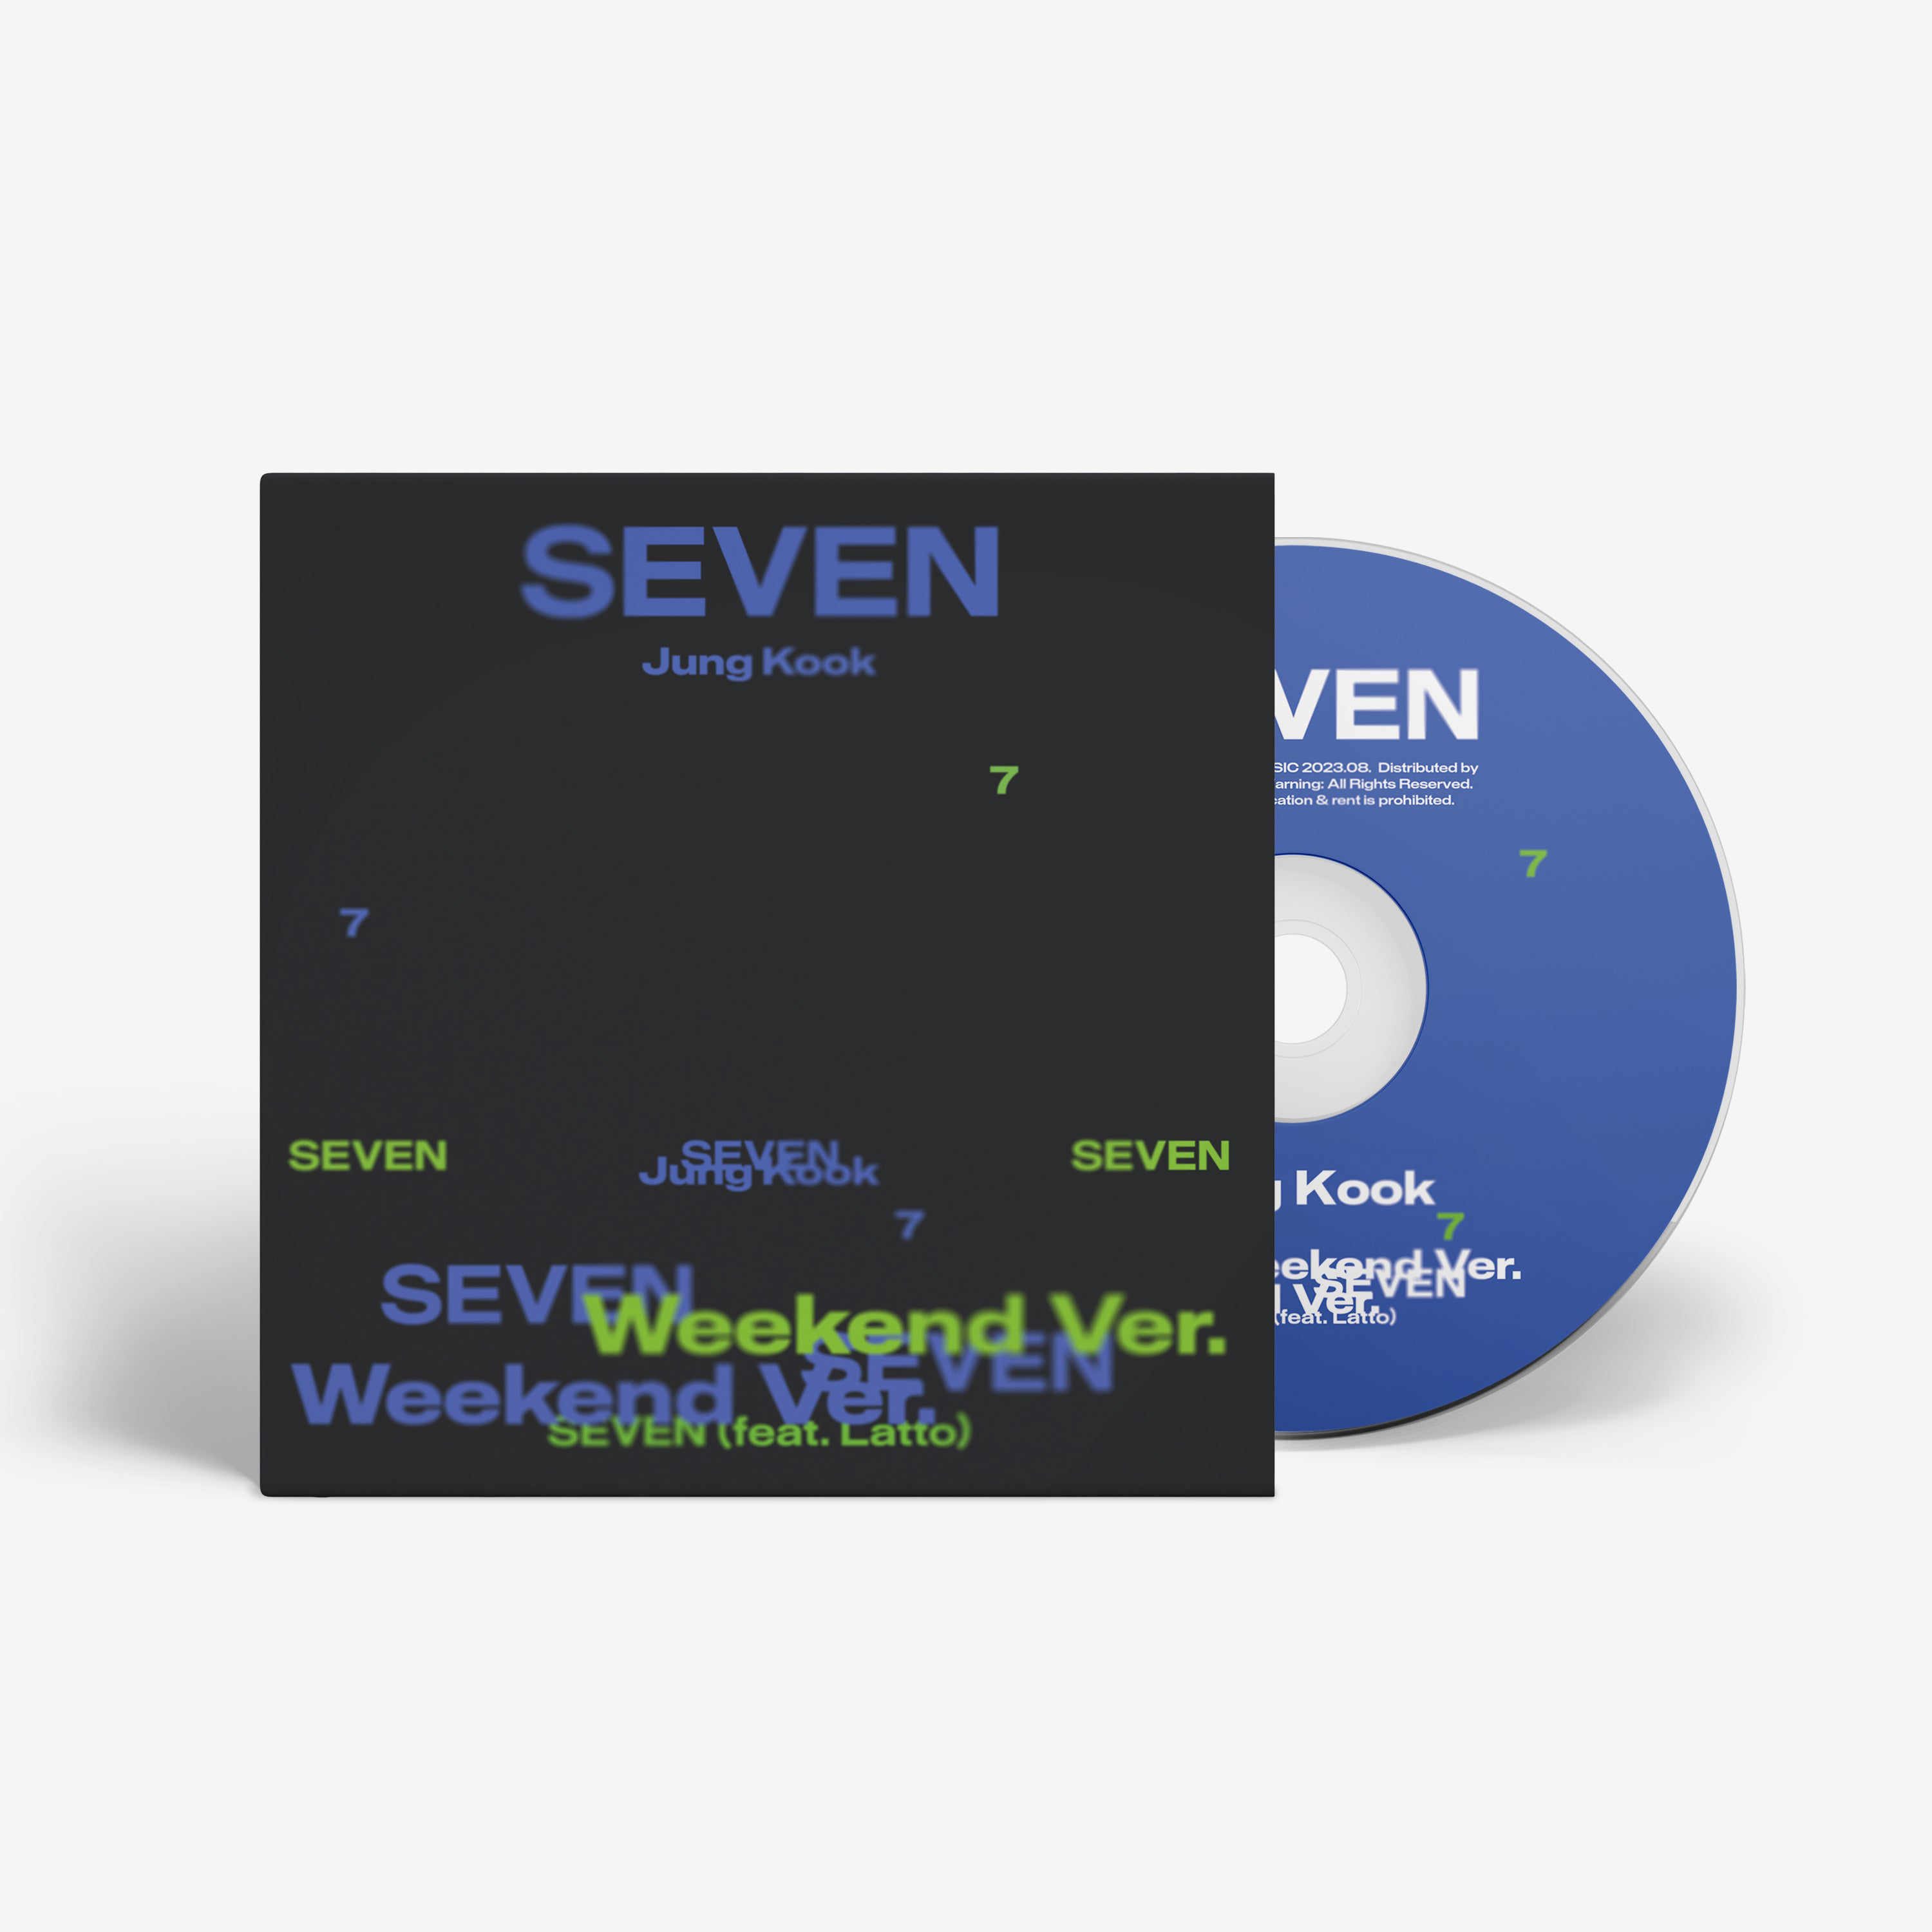 Seven - Official BTS Music Store